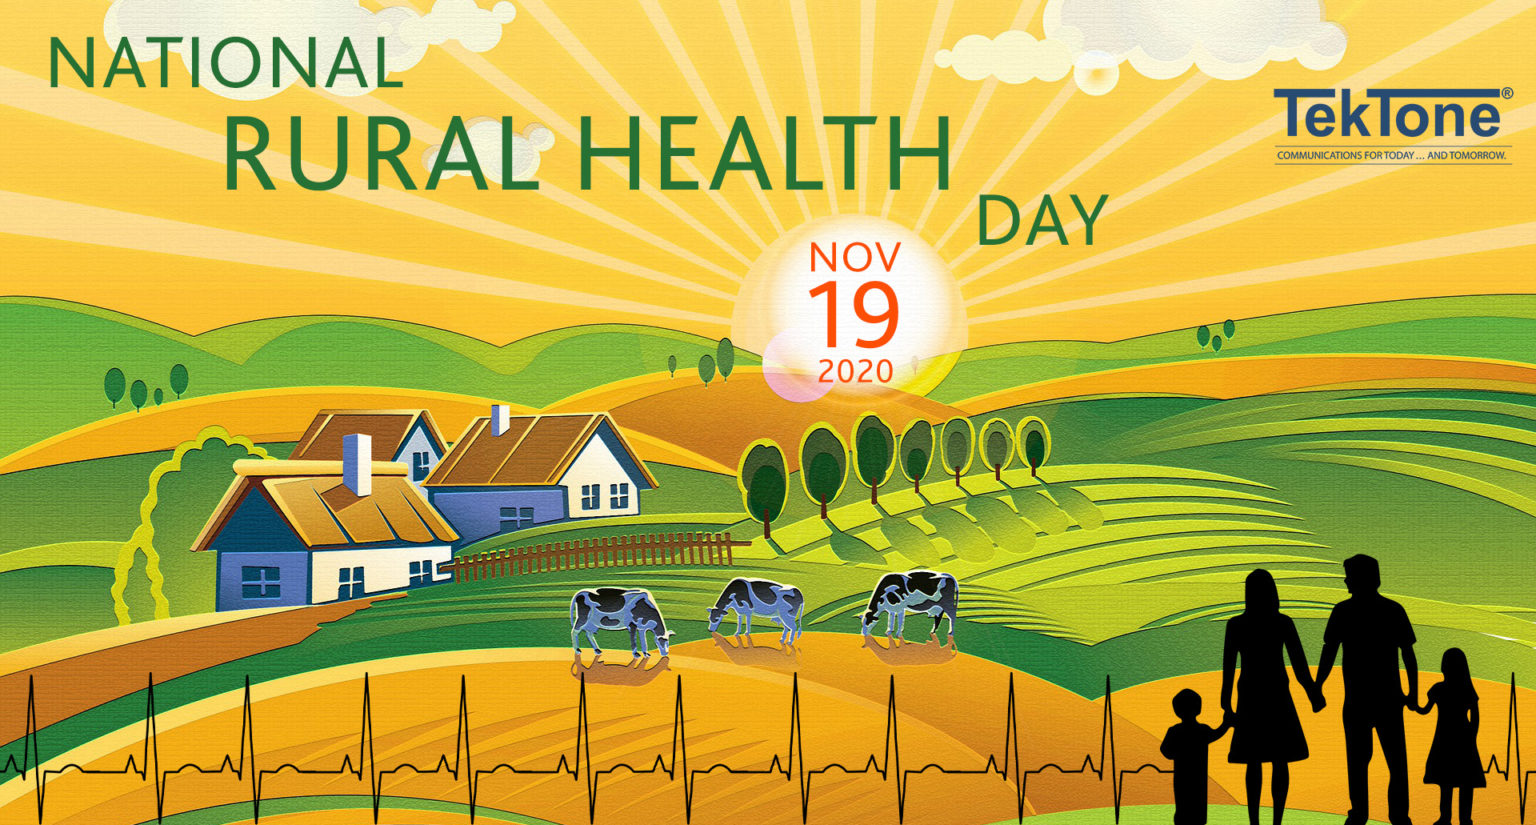 National Rural Health Day TekTone®